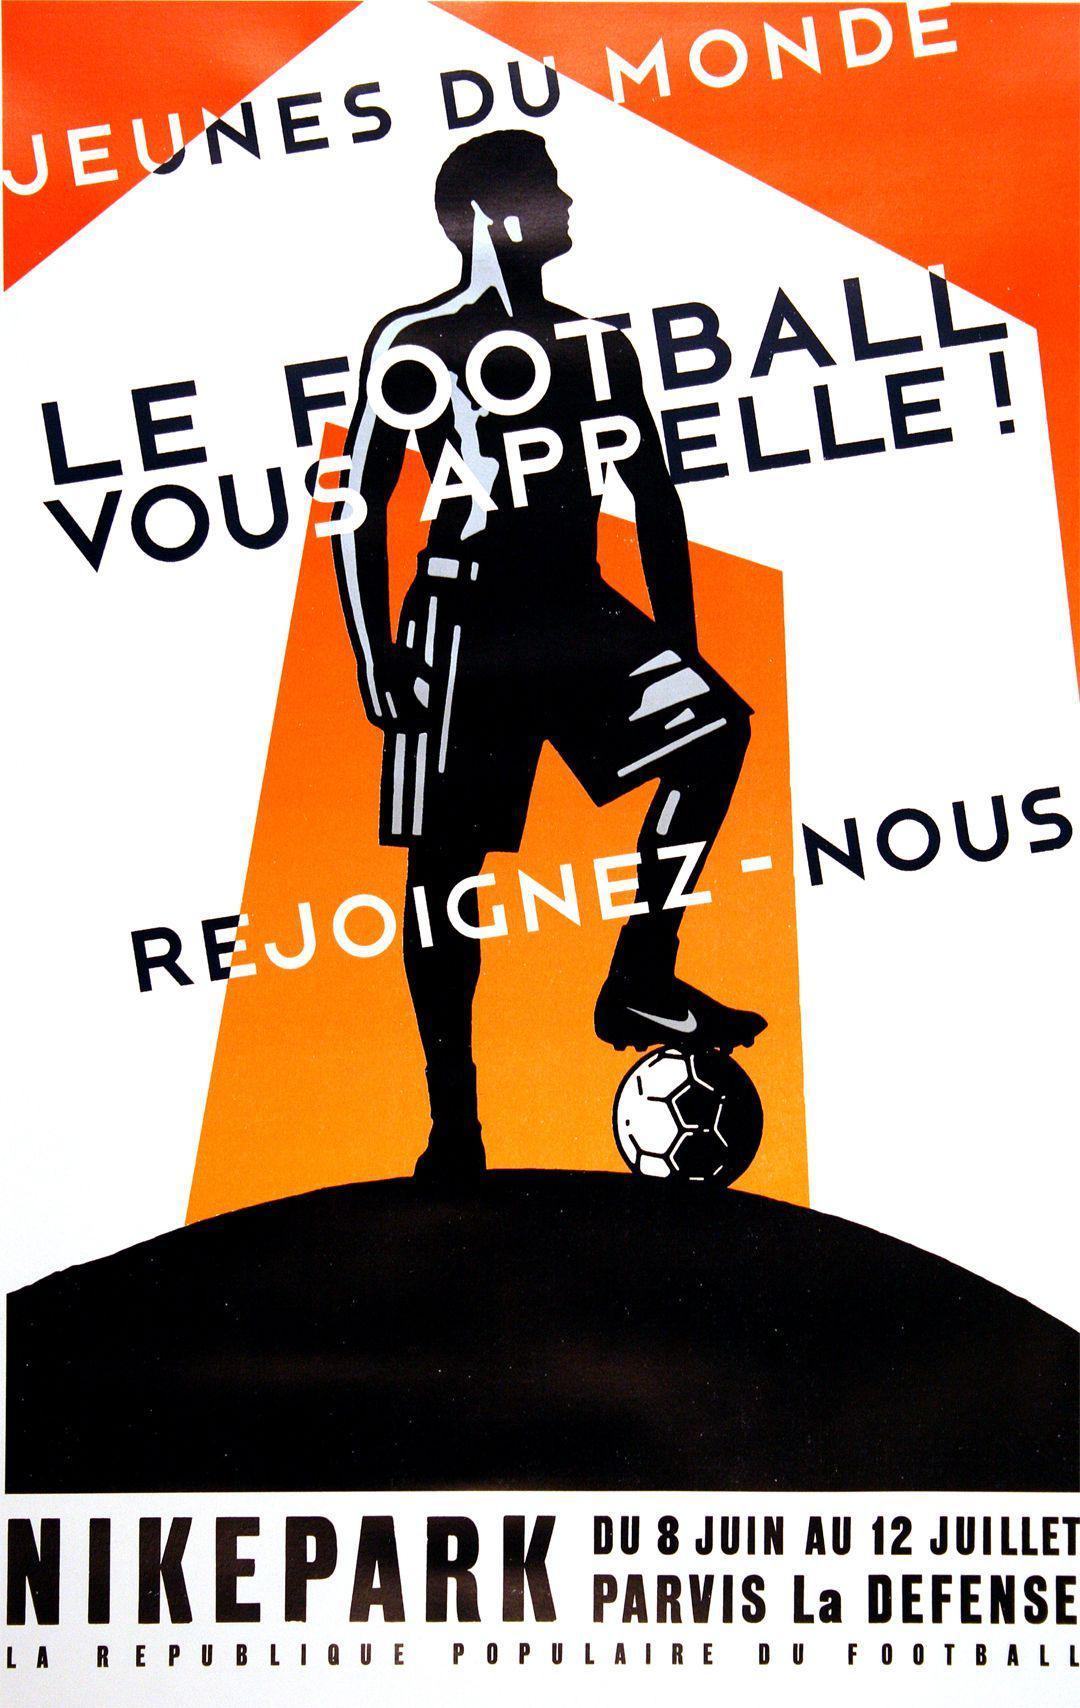 Nike Park Poster 1998 Original - Jeunes du Monde